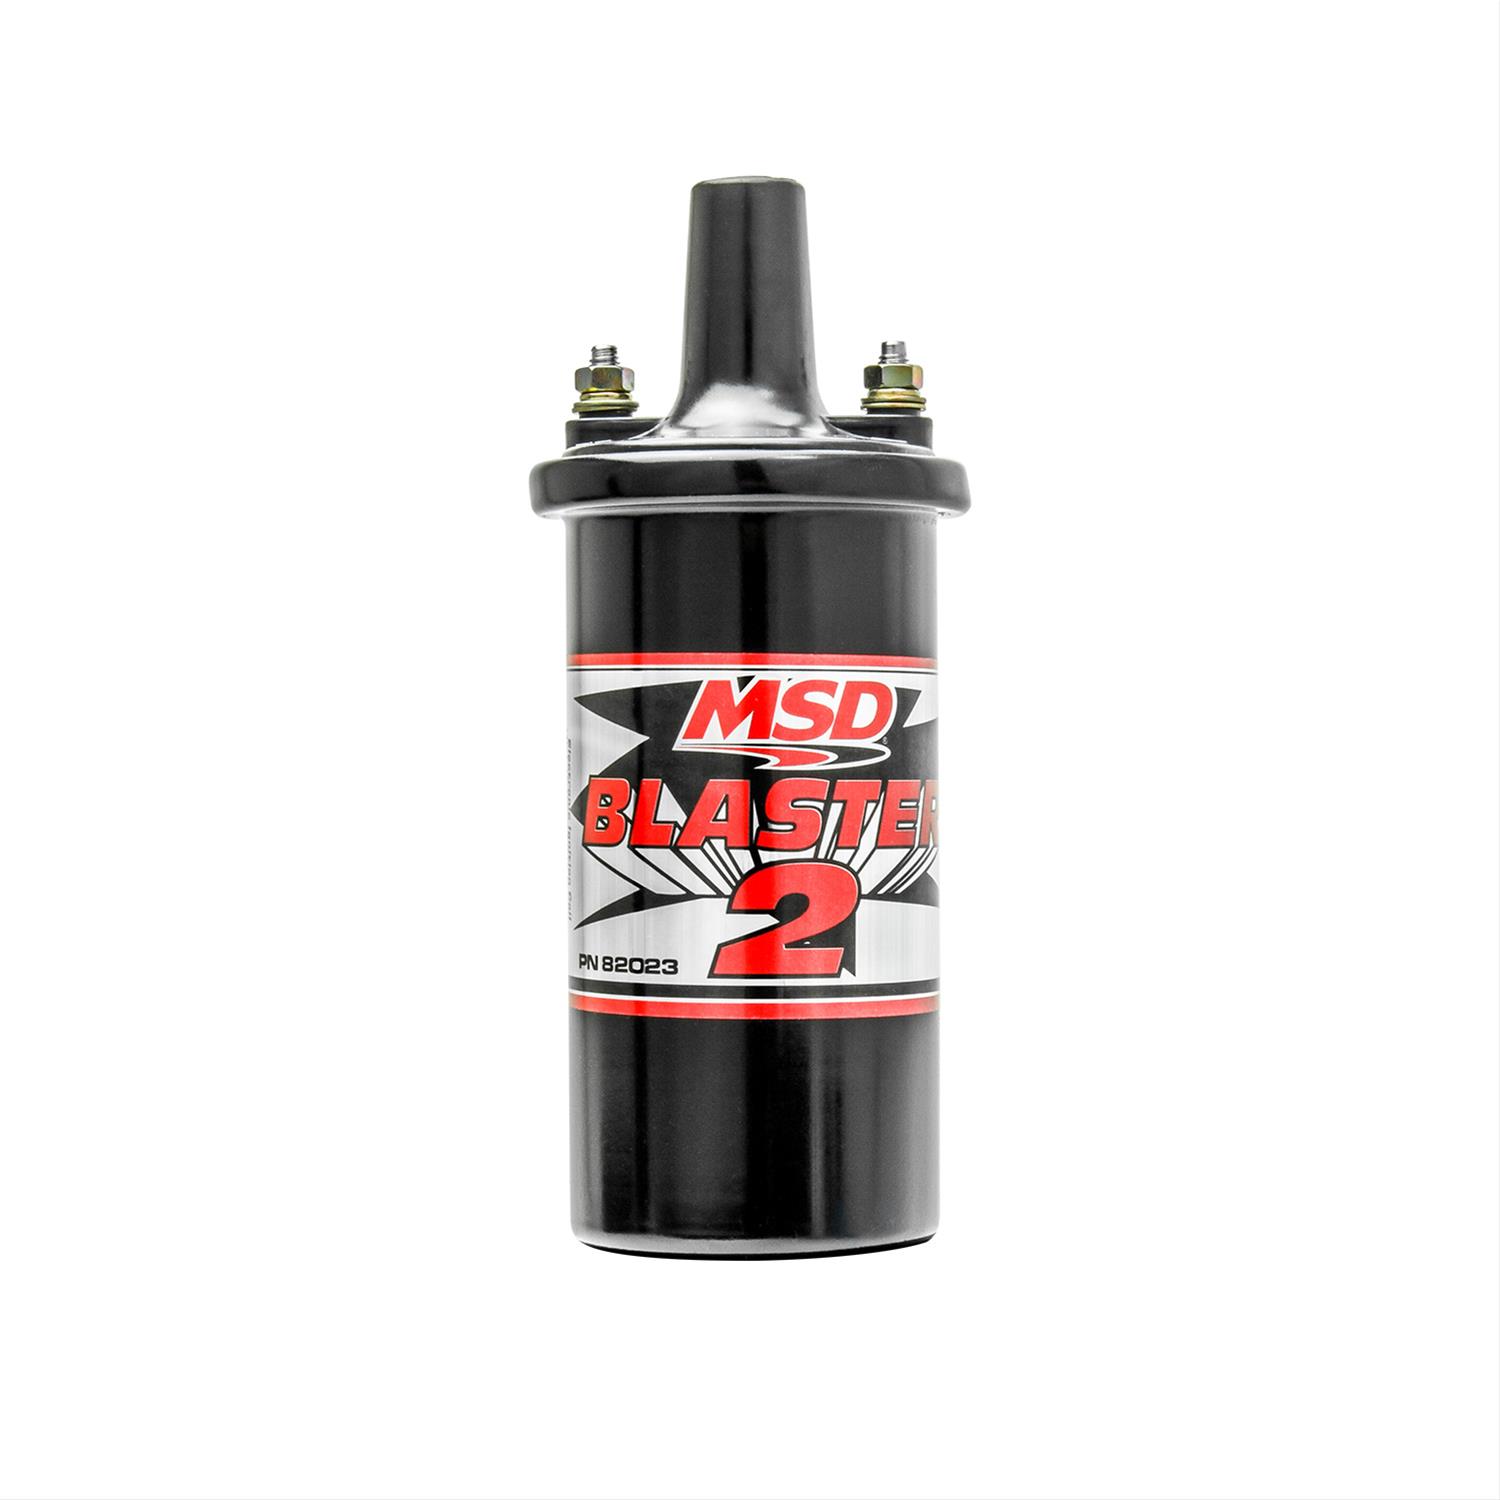 MSD 82023 Blaster 2 Ignition Coils 